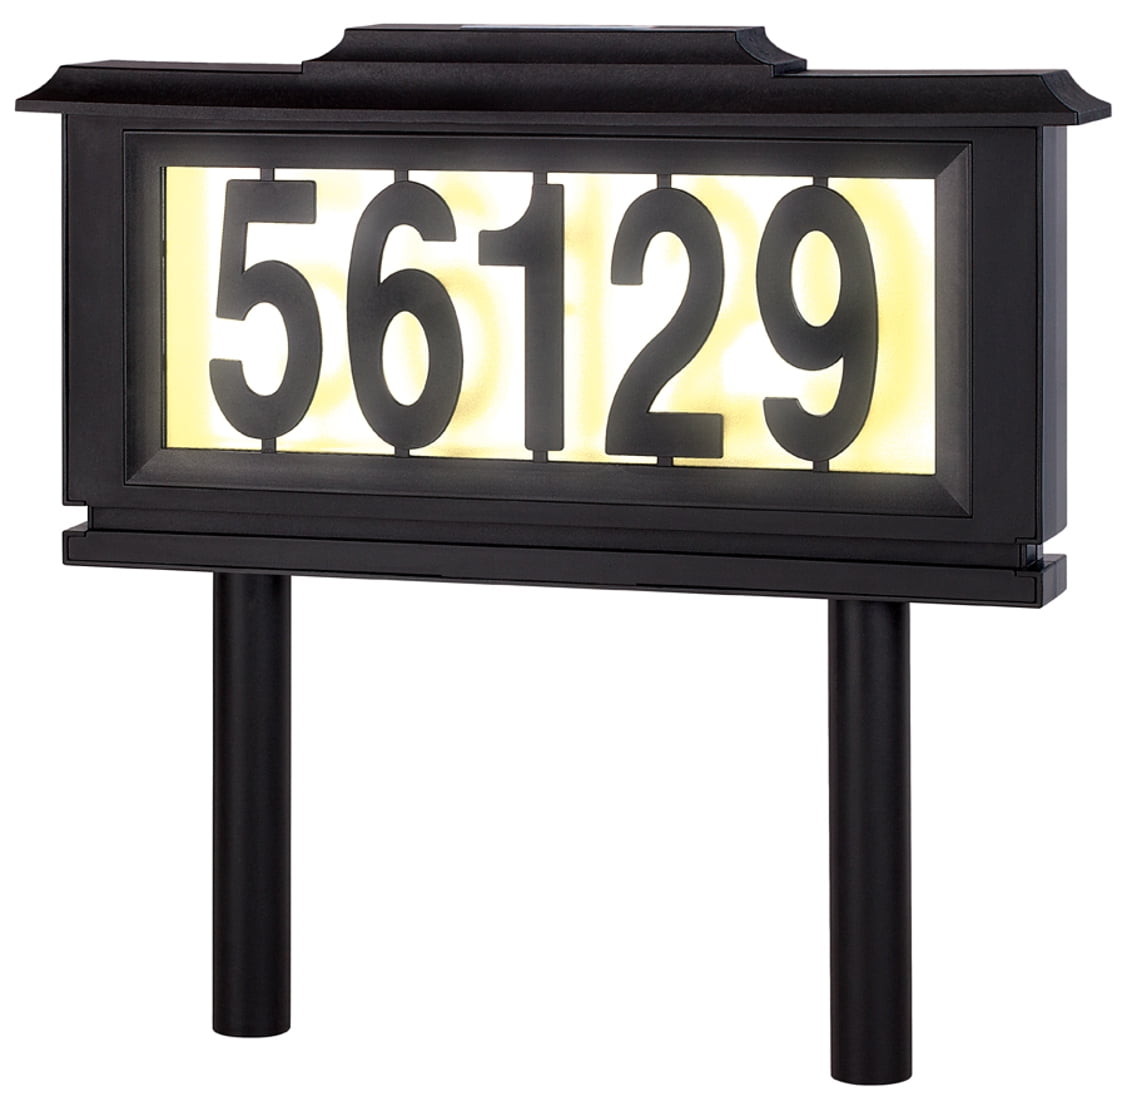 Solar Address Sign House Number Street Alphanumeric Number Light 0-9 Type